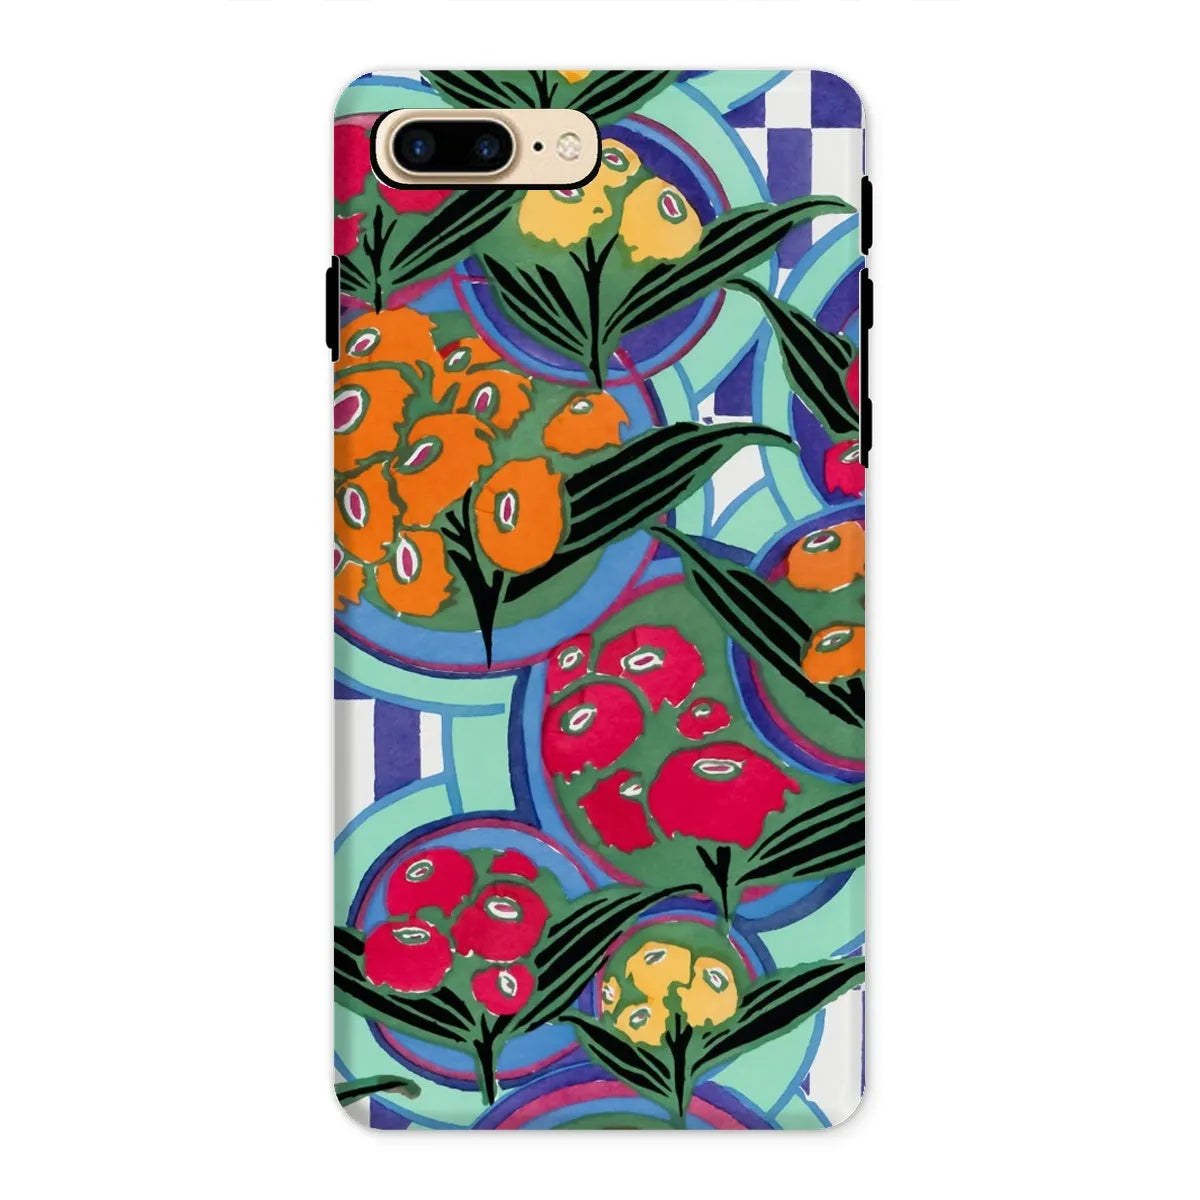 Vibrant Floral Aesthetic Art Phone Case - E.a. Séguy - Iphone 8 Plus / Matte - Mobile Phone Cases - Aesthetic Art